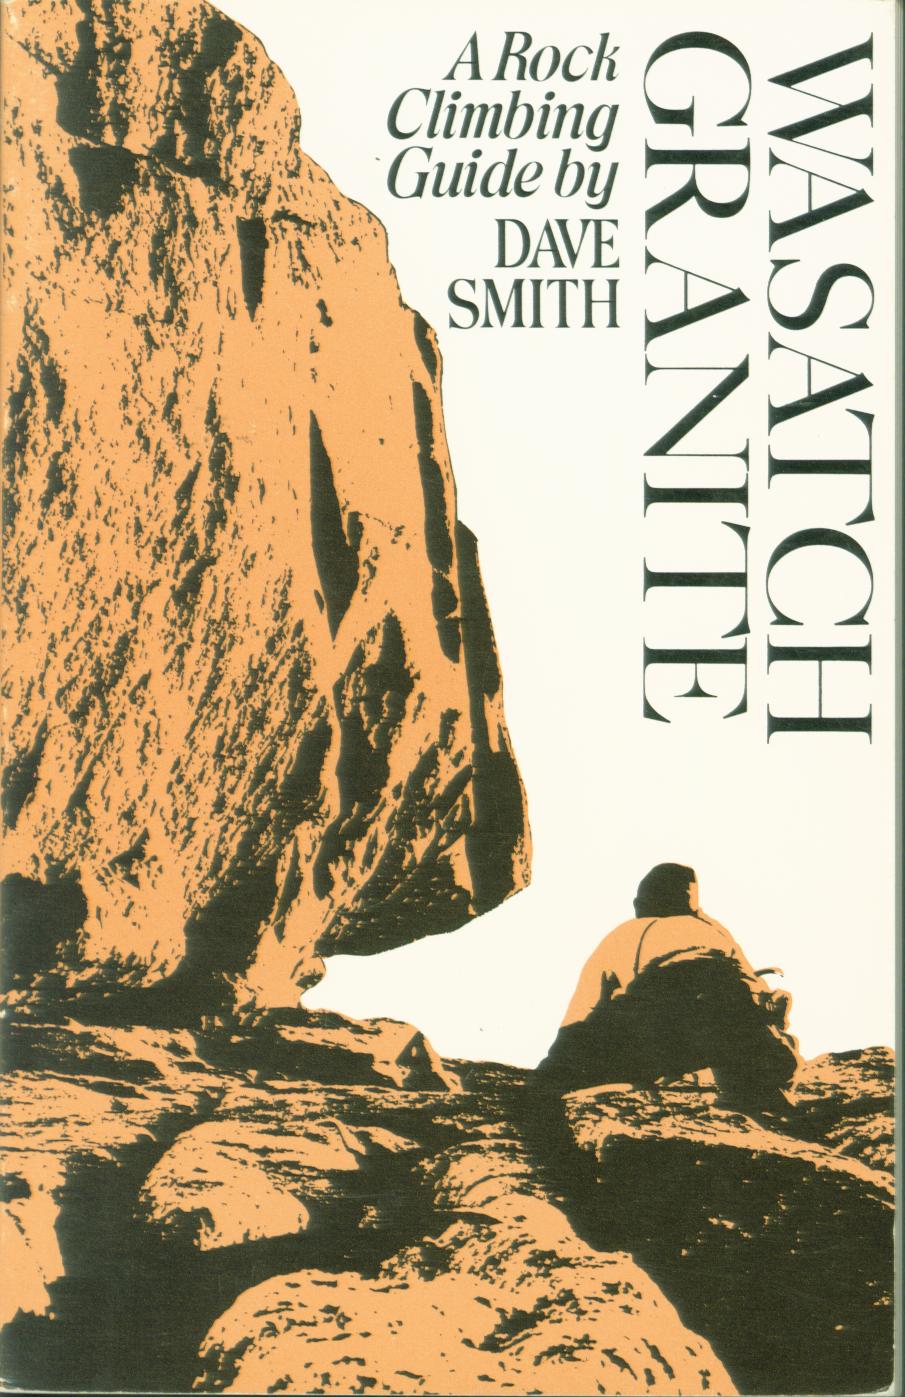 WASATCH GRANITE: a rock climbing guide. 